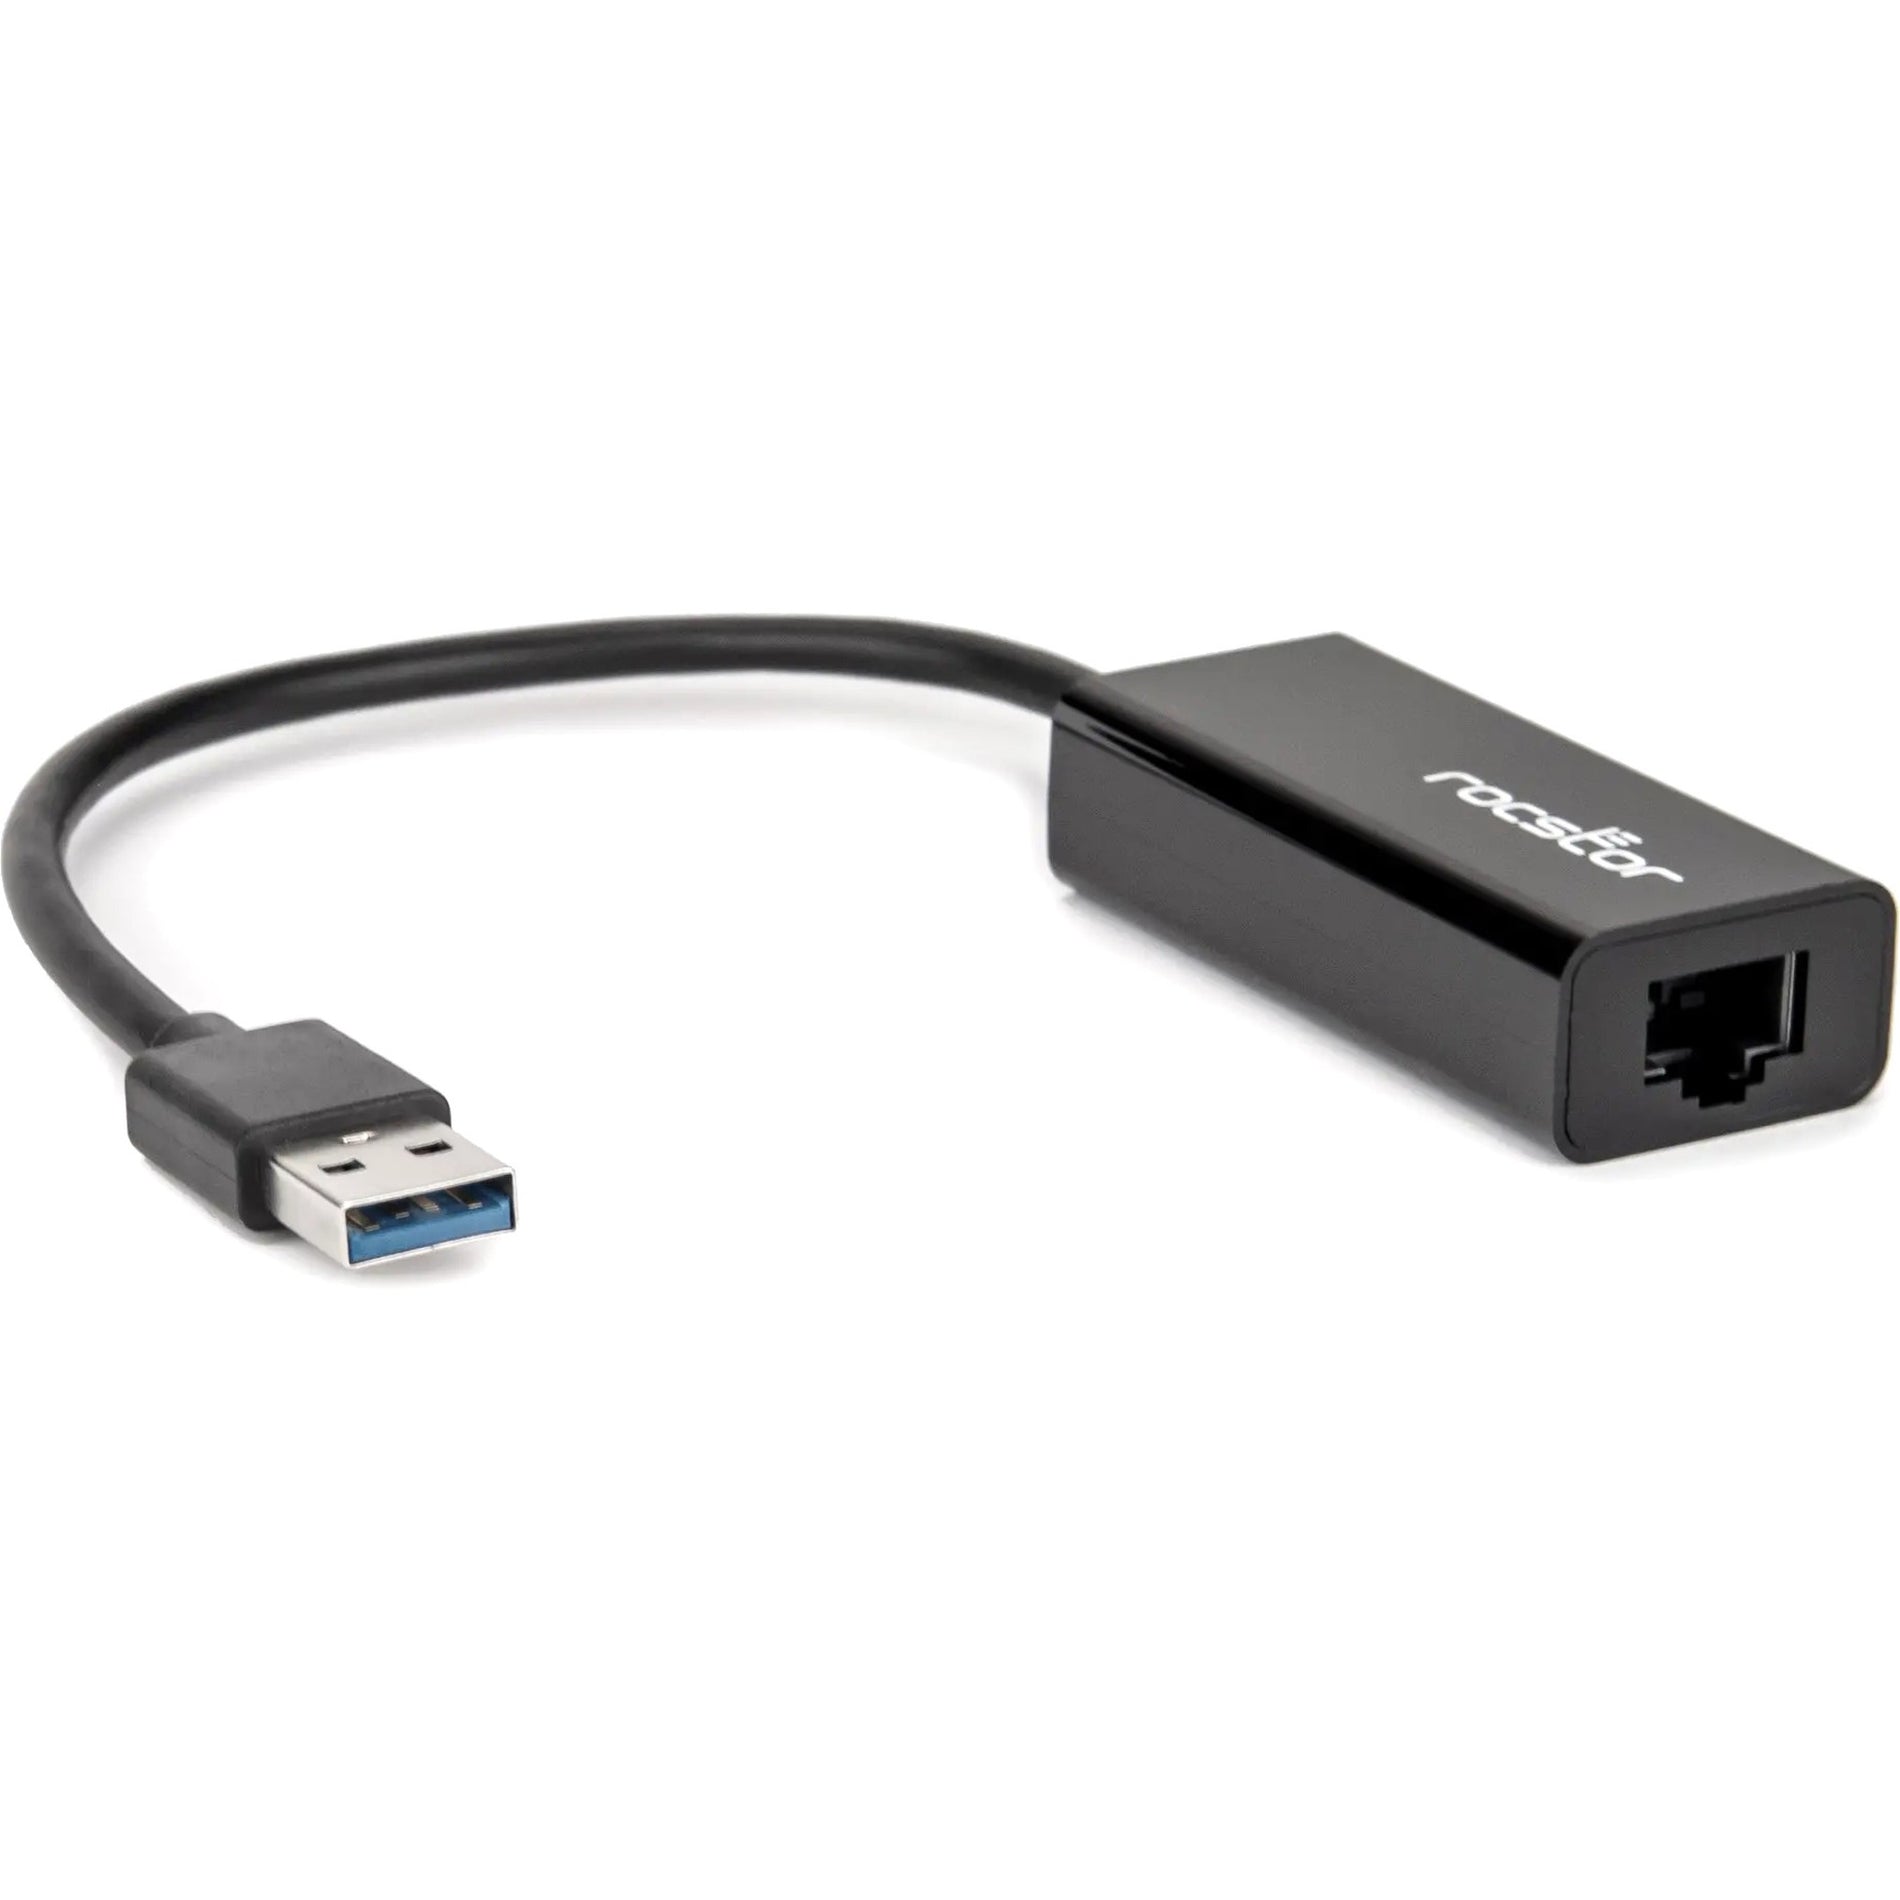 Rocstor Y10C137-B1 USB 3.0 to Gigabit Ethernet Network Adapter, 2 Year Warranty, RoHS Certified